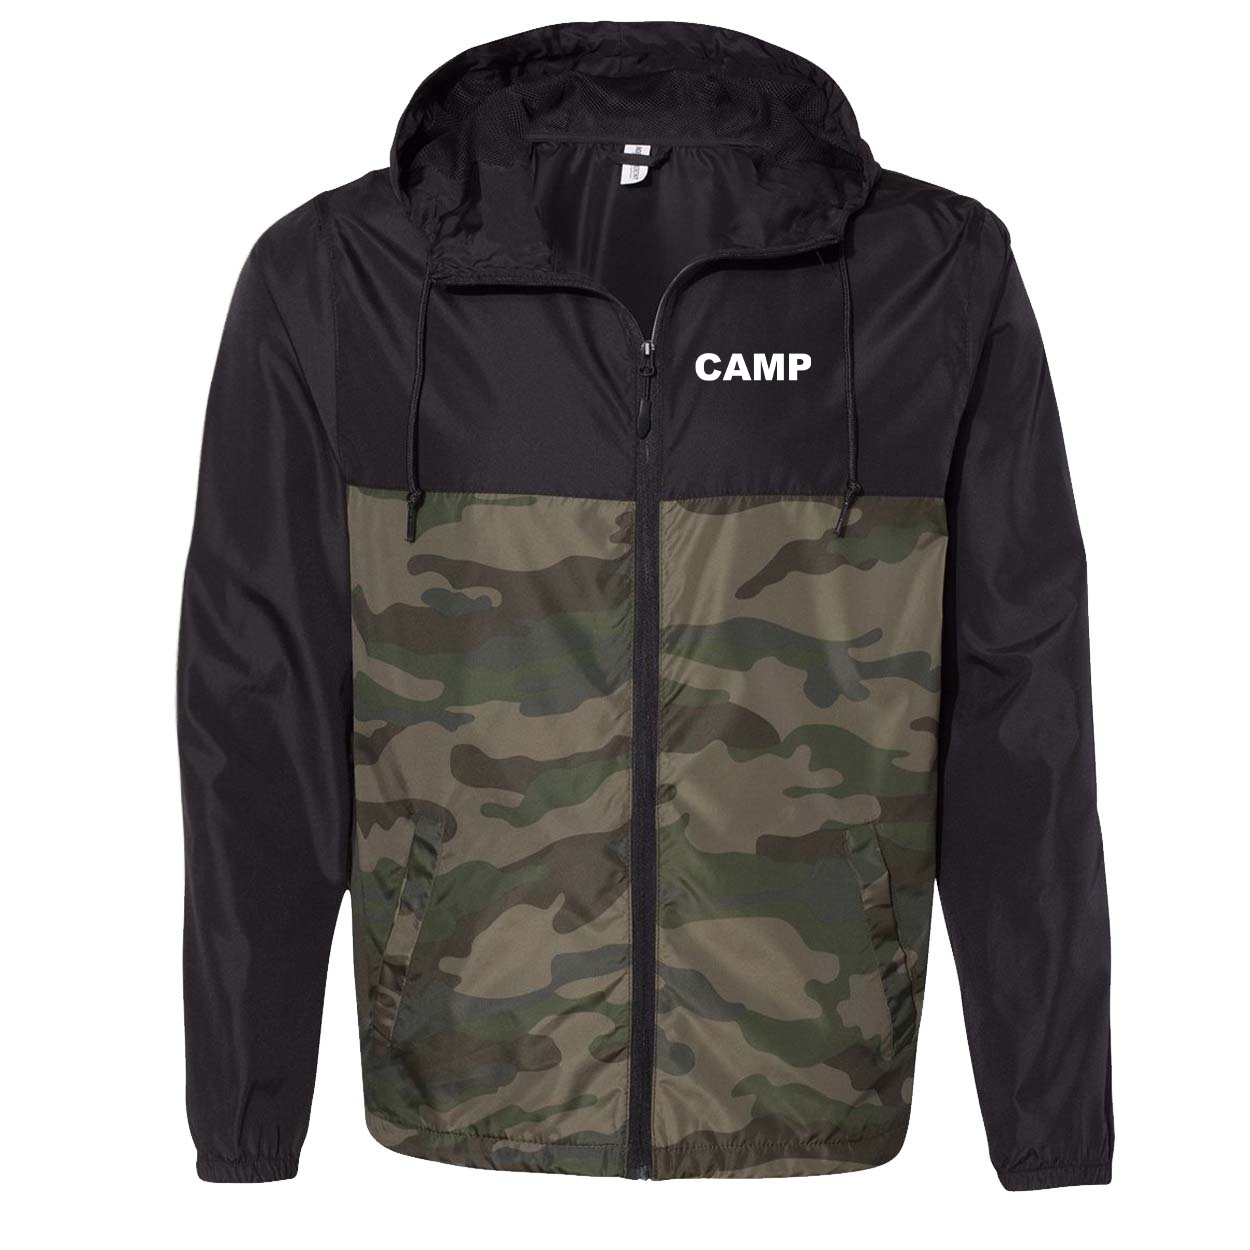 Camp Brand Logo Night Out Lightweight Windbreaker Black/Forest Camo